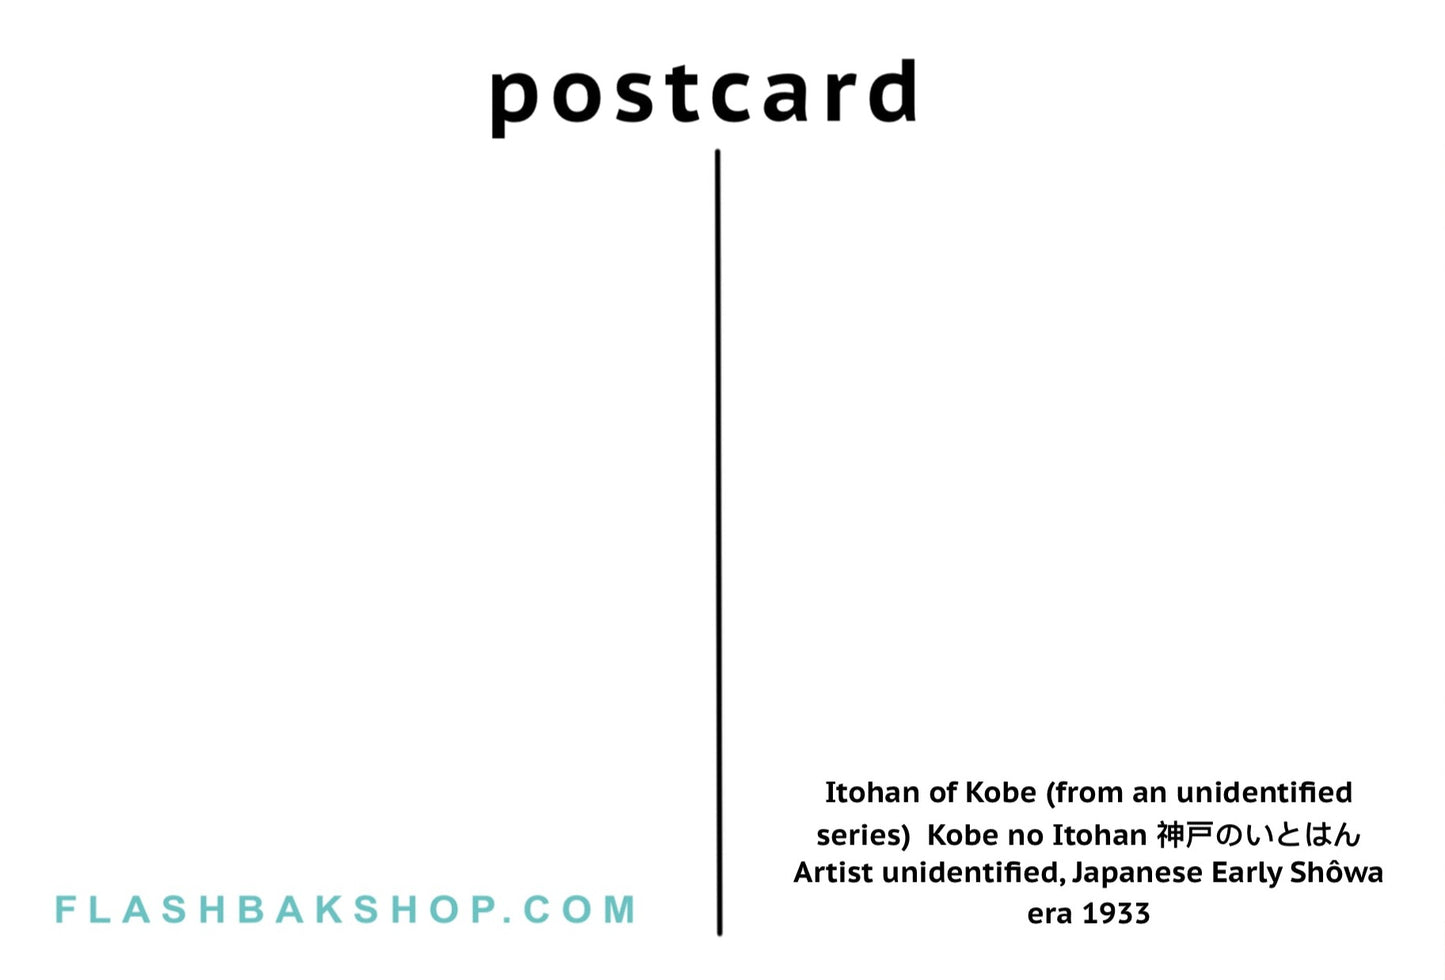 Itohan of Kobe, 1933 - Postcard